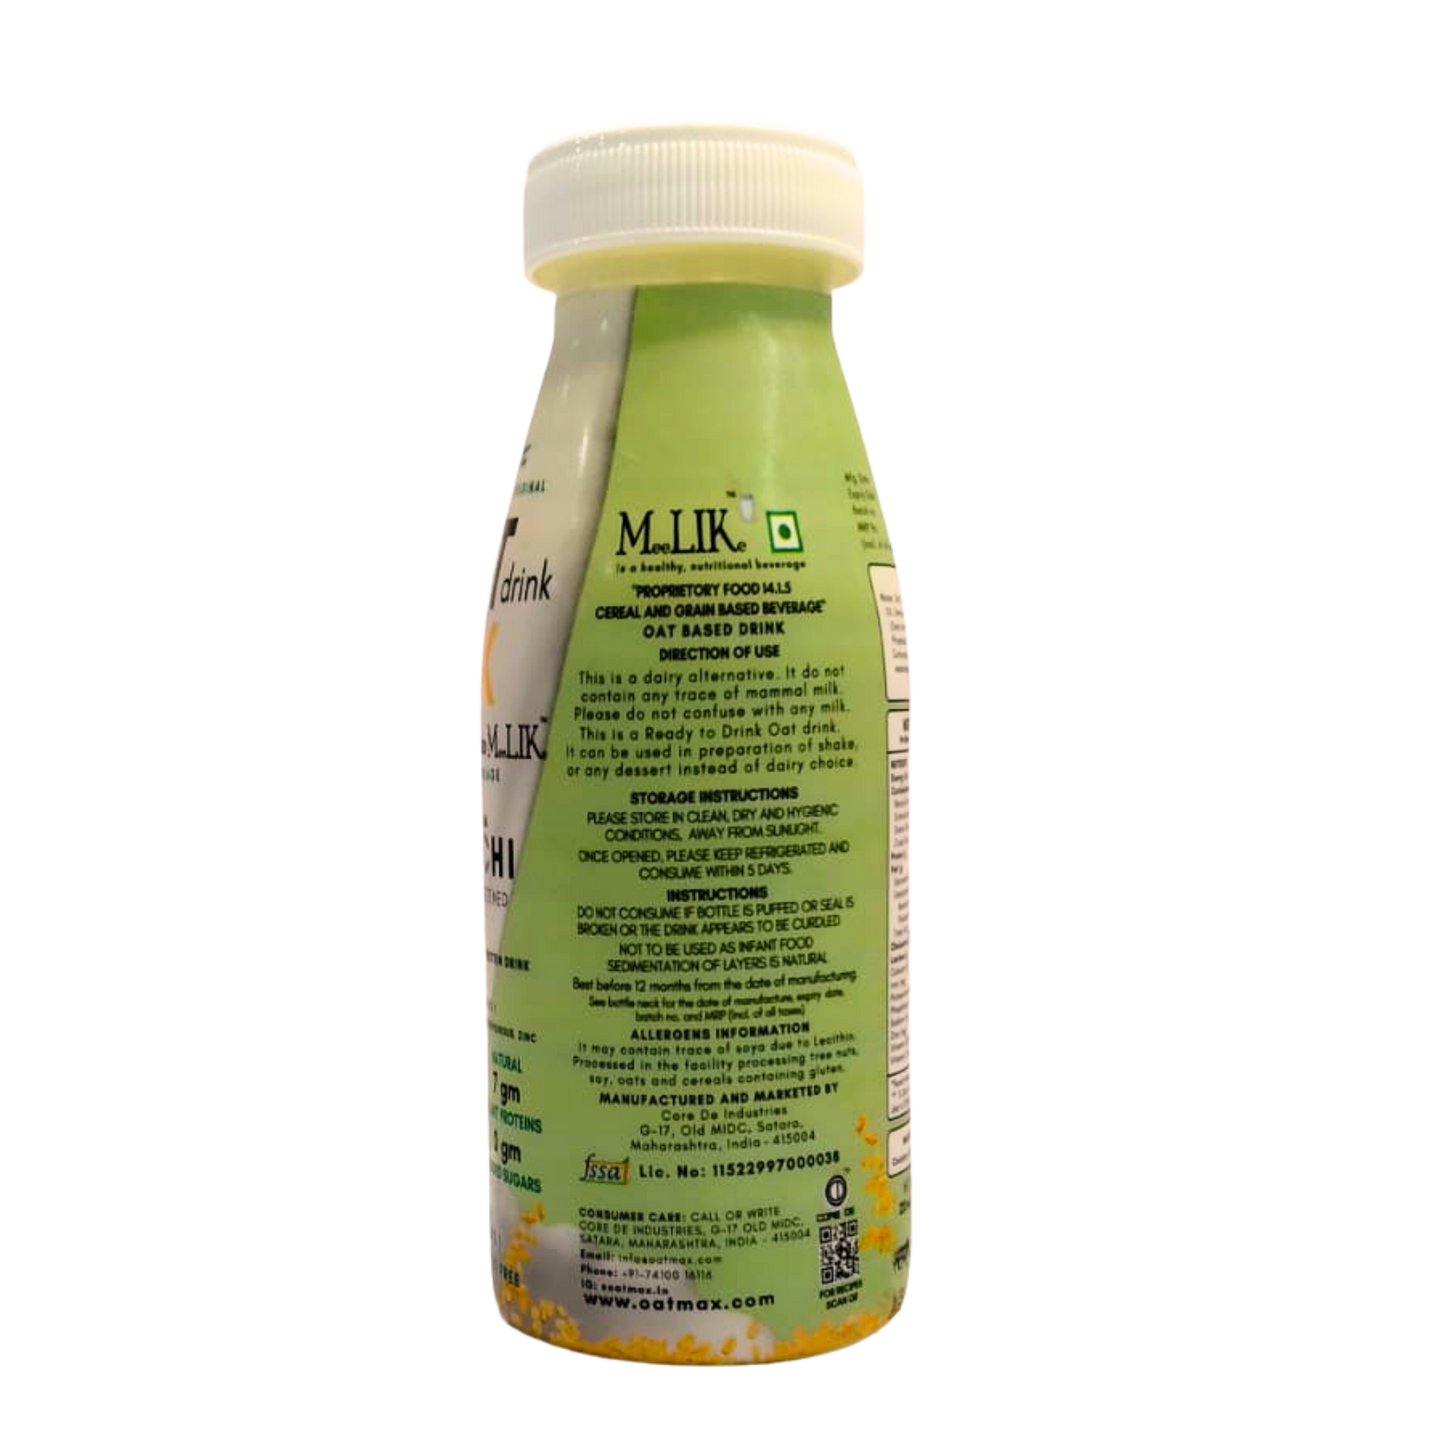 OATMAX Elaichi Oat Milk - Pack of 6 (220 ml each) - Lactose-free, Stevia Sweetened, Preservatives-free, Plant based Vegan Milk Alternative